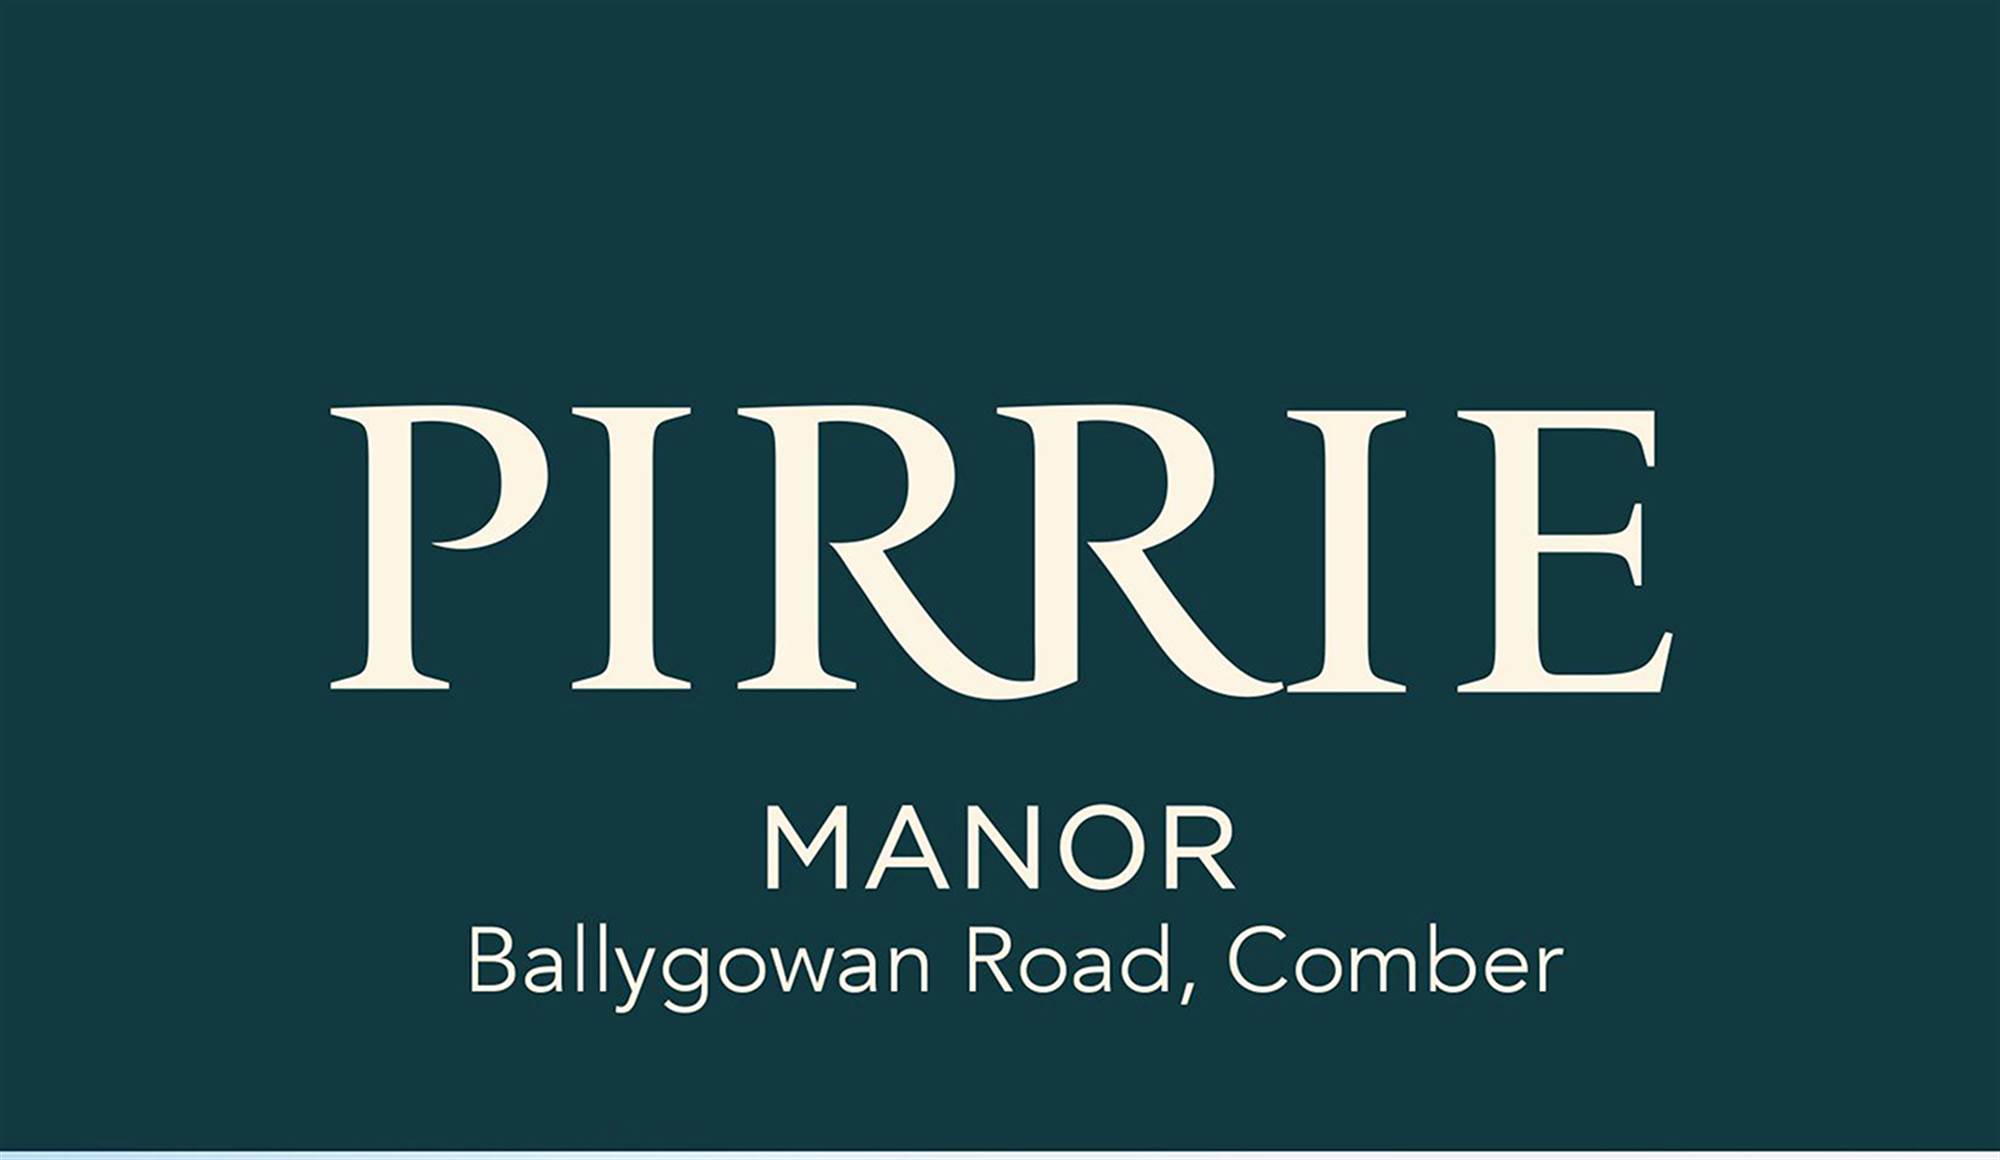 Pirrie Manor, Ballygowan Road, Comber